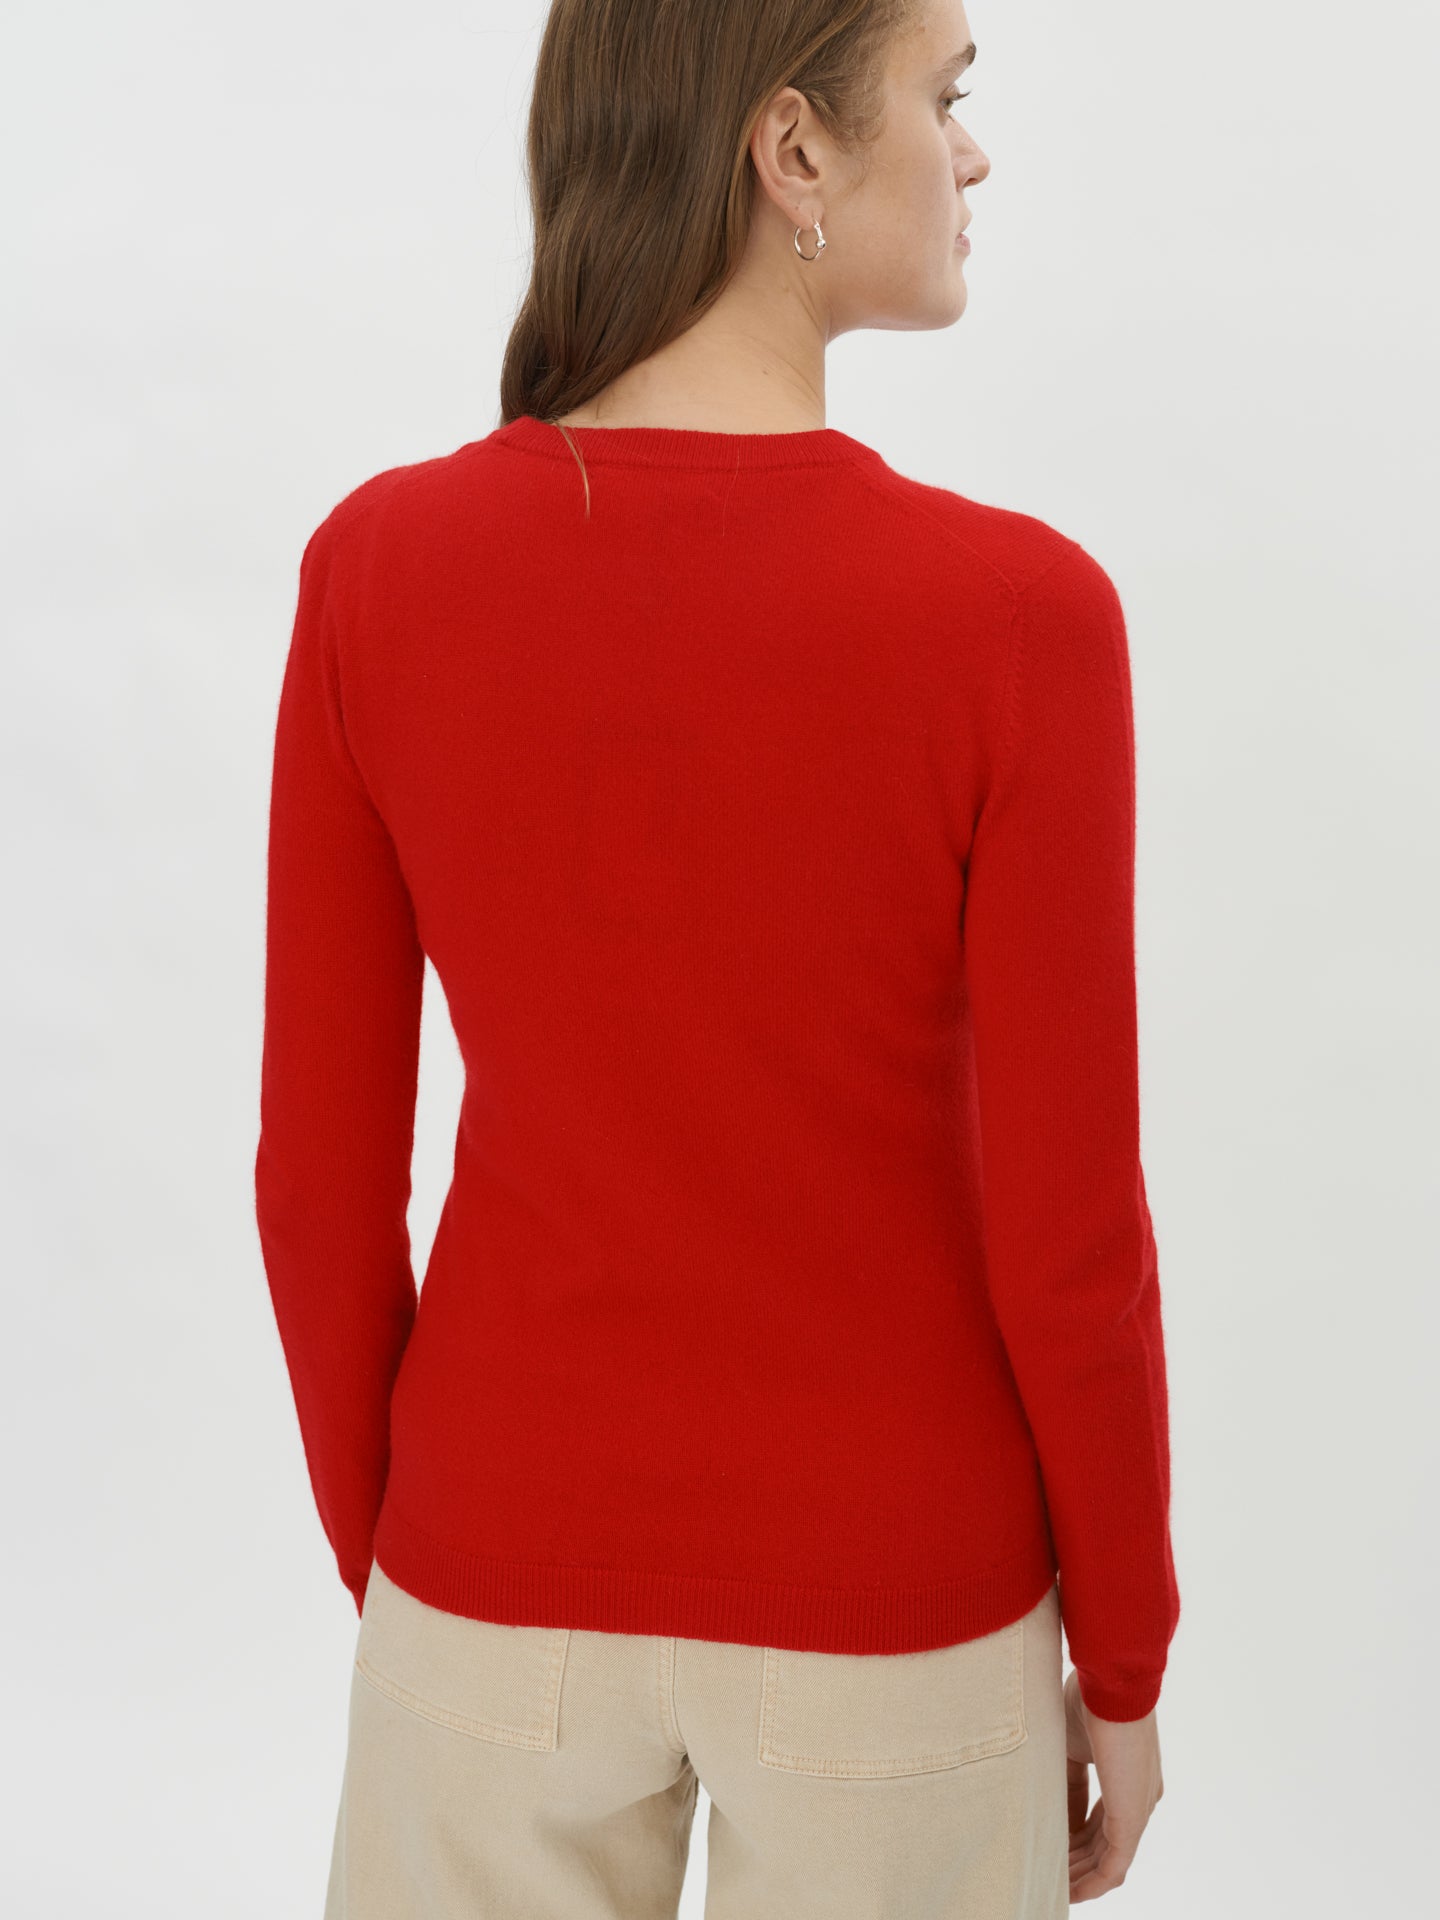 Women's Basic Crew Neck Sweater Red - Gobi Cashmere